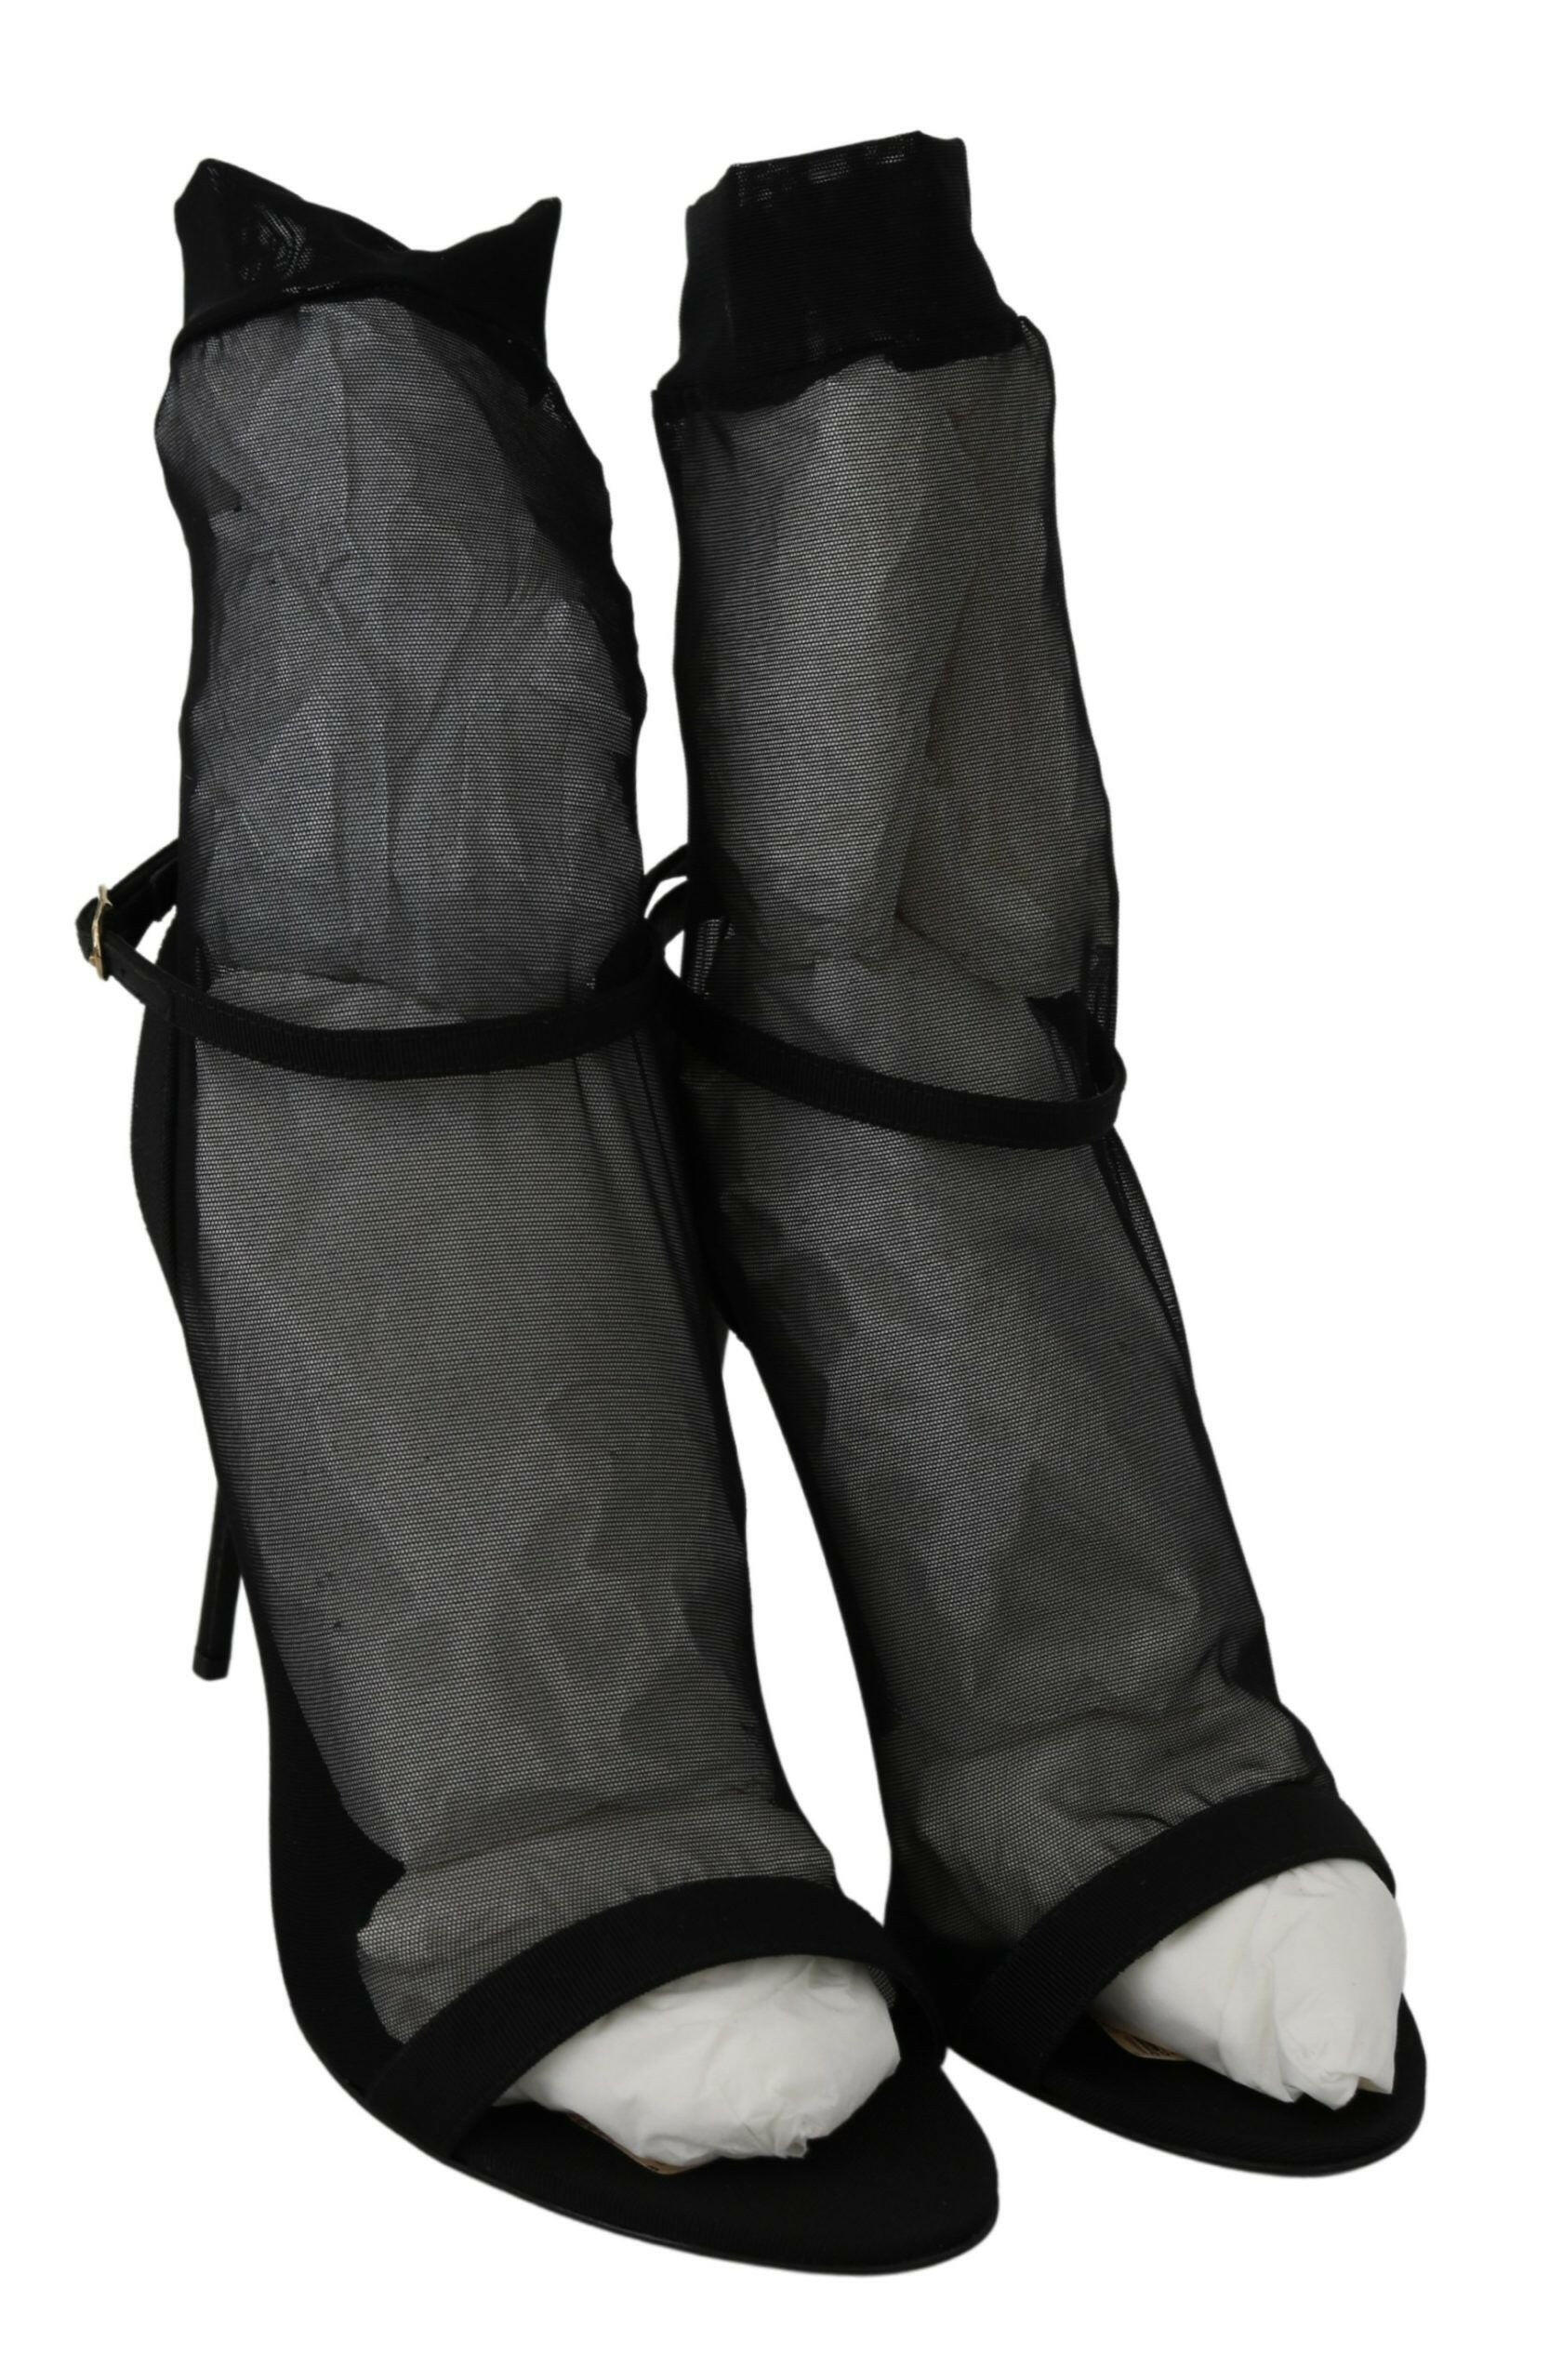 Dolce & Gabbana Black Tulle Stretch Stilettos Sandals Shoes - GENUINE AUTHENTIC BRAND LLC  